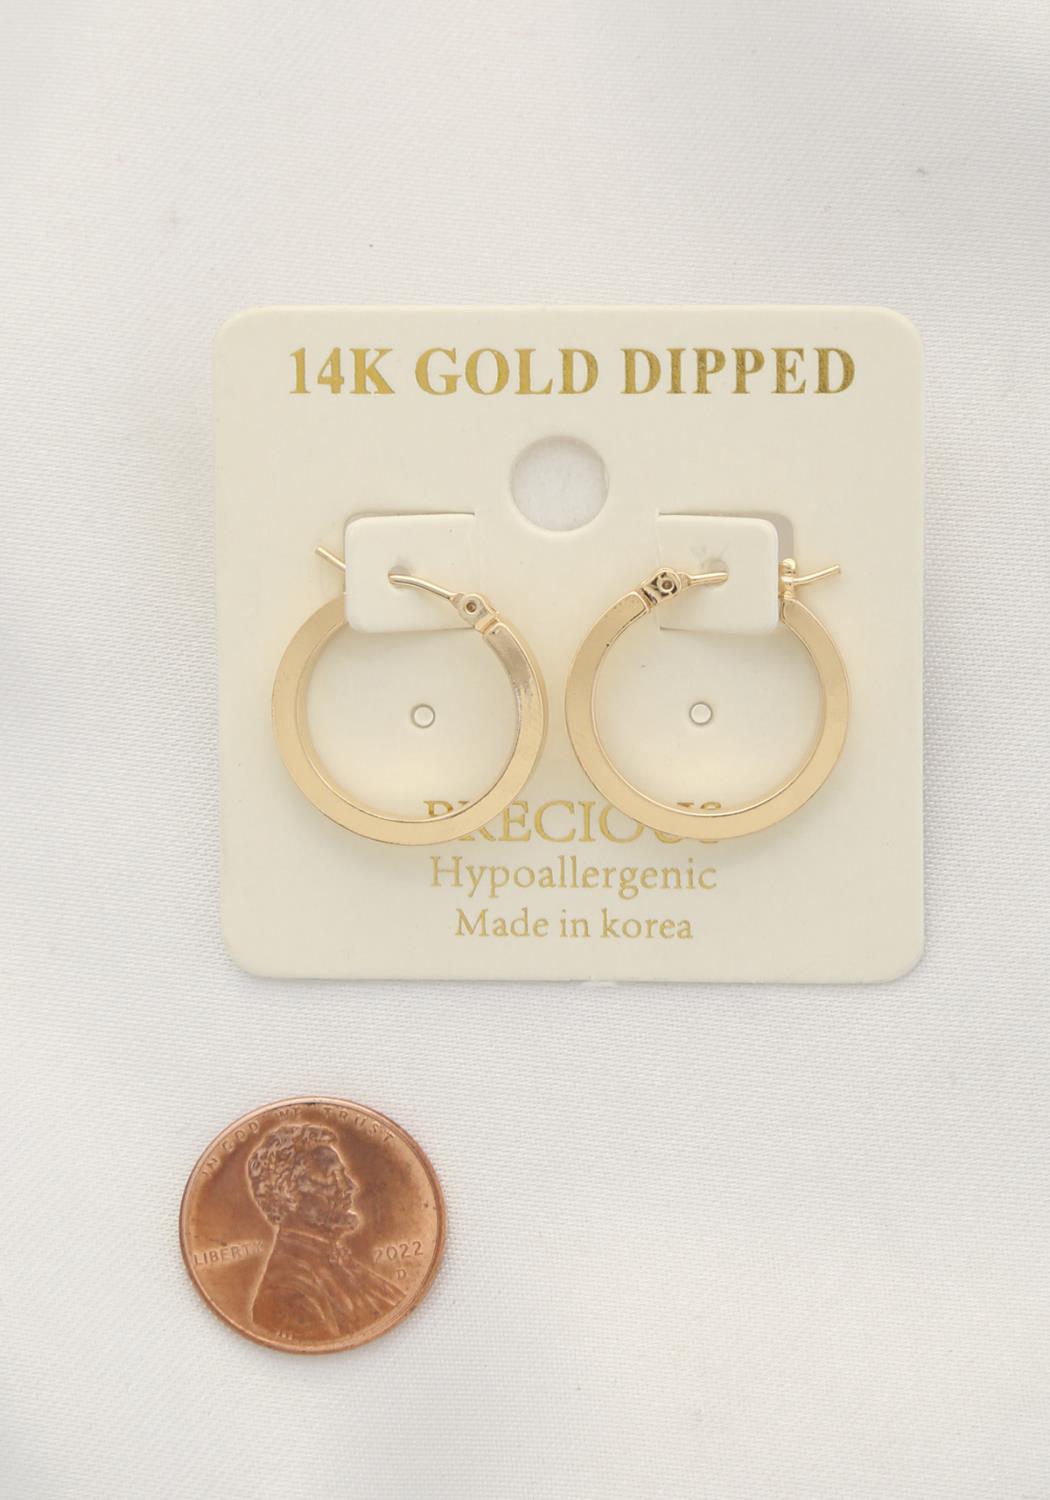 Gold/Rhodium Square Edge 14k Gold Dipped Hoop Earrings